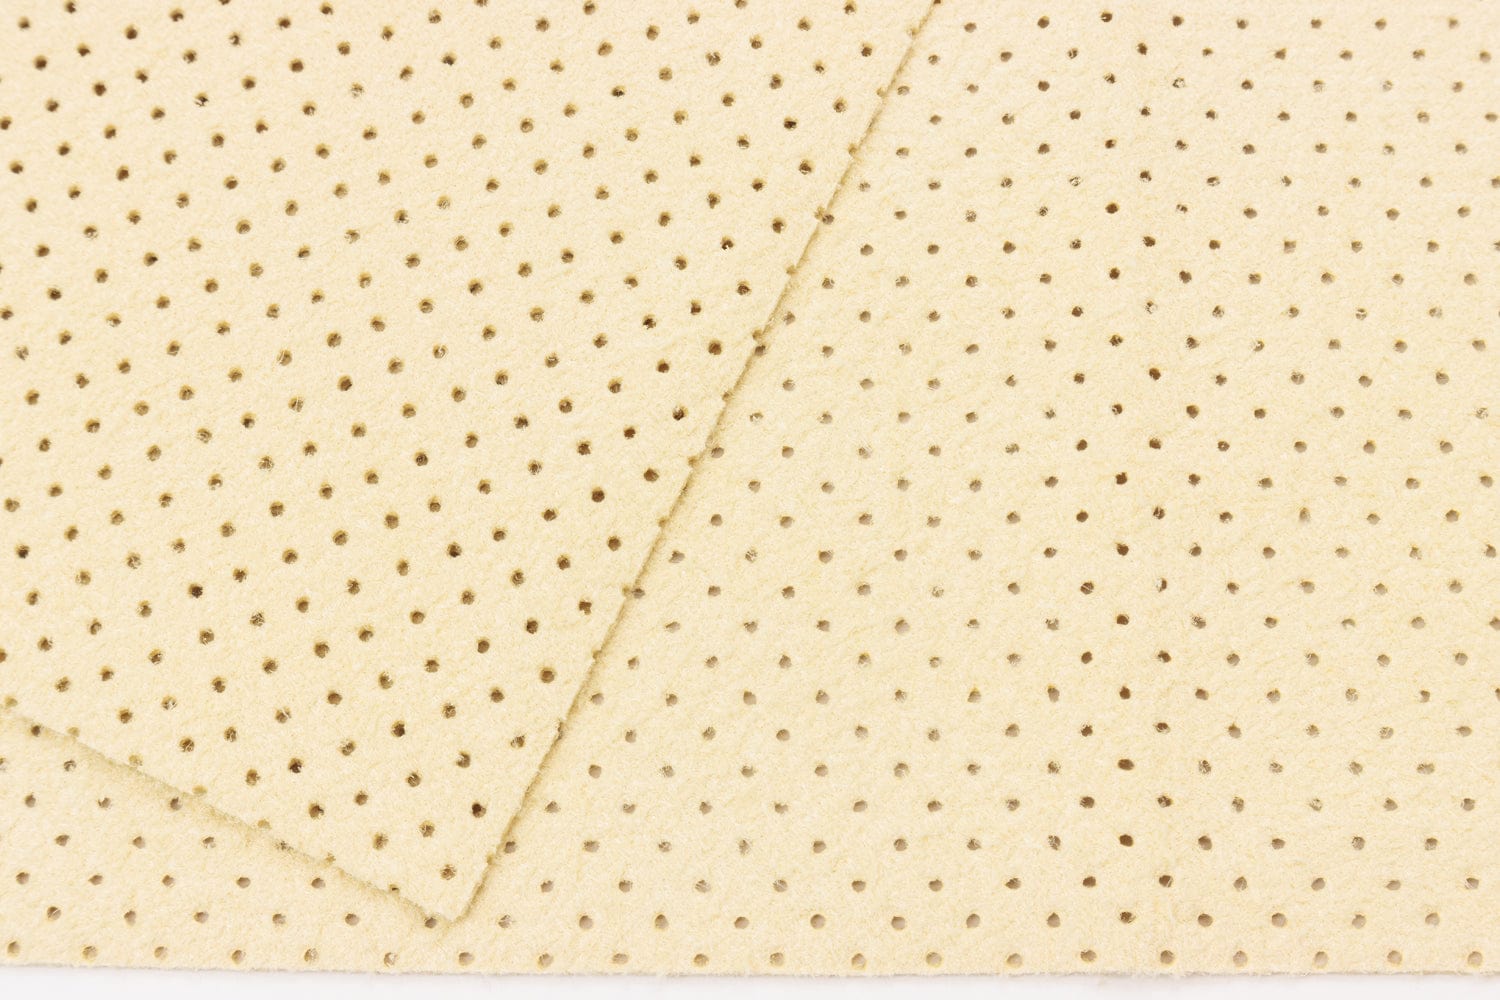 Autofiber Towel FULL CASE [Holey Shammy] Perforated Synthetic Microfiber Chamois - 15"x25" 150/case